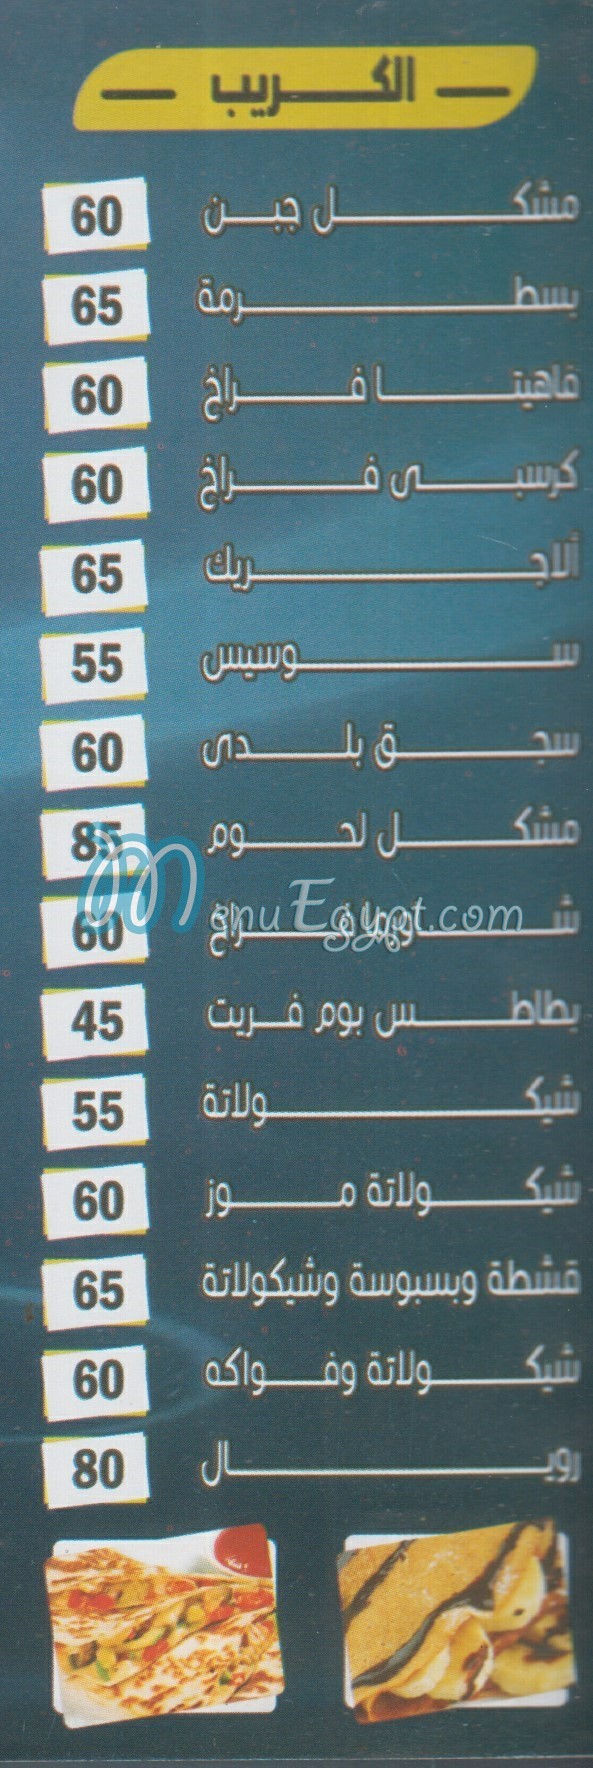 Morgana menu Egypt 2